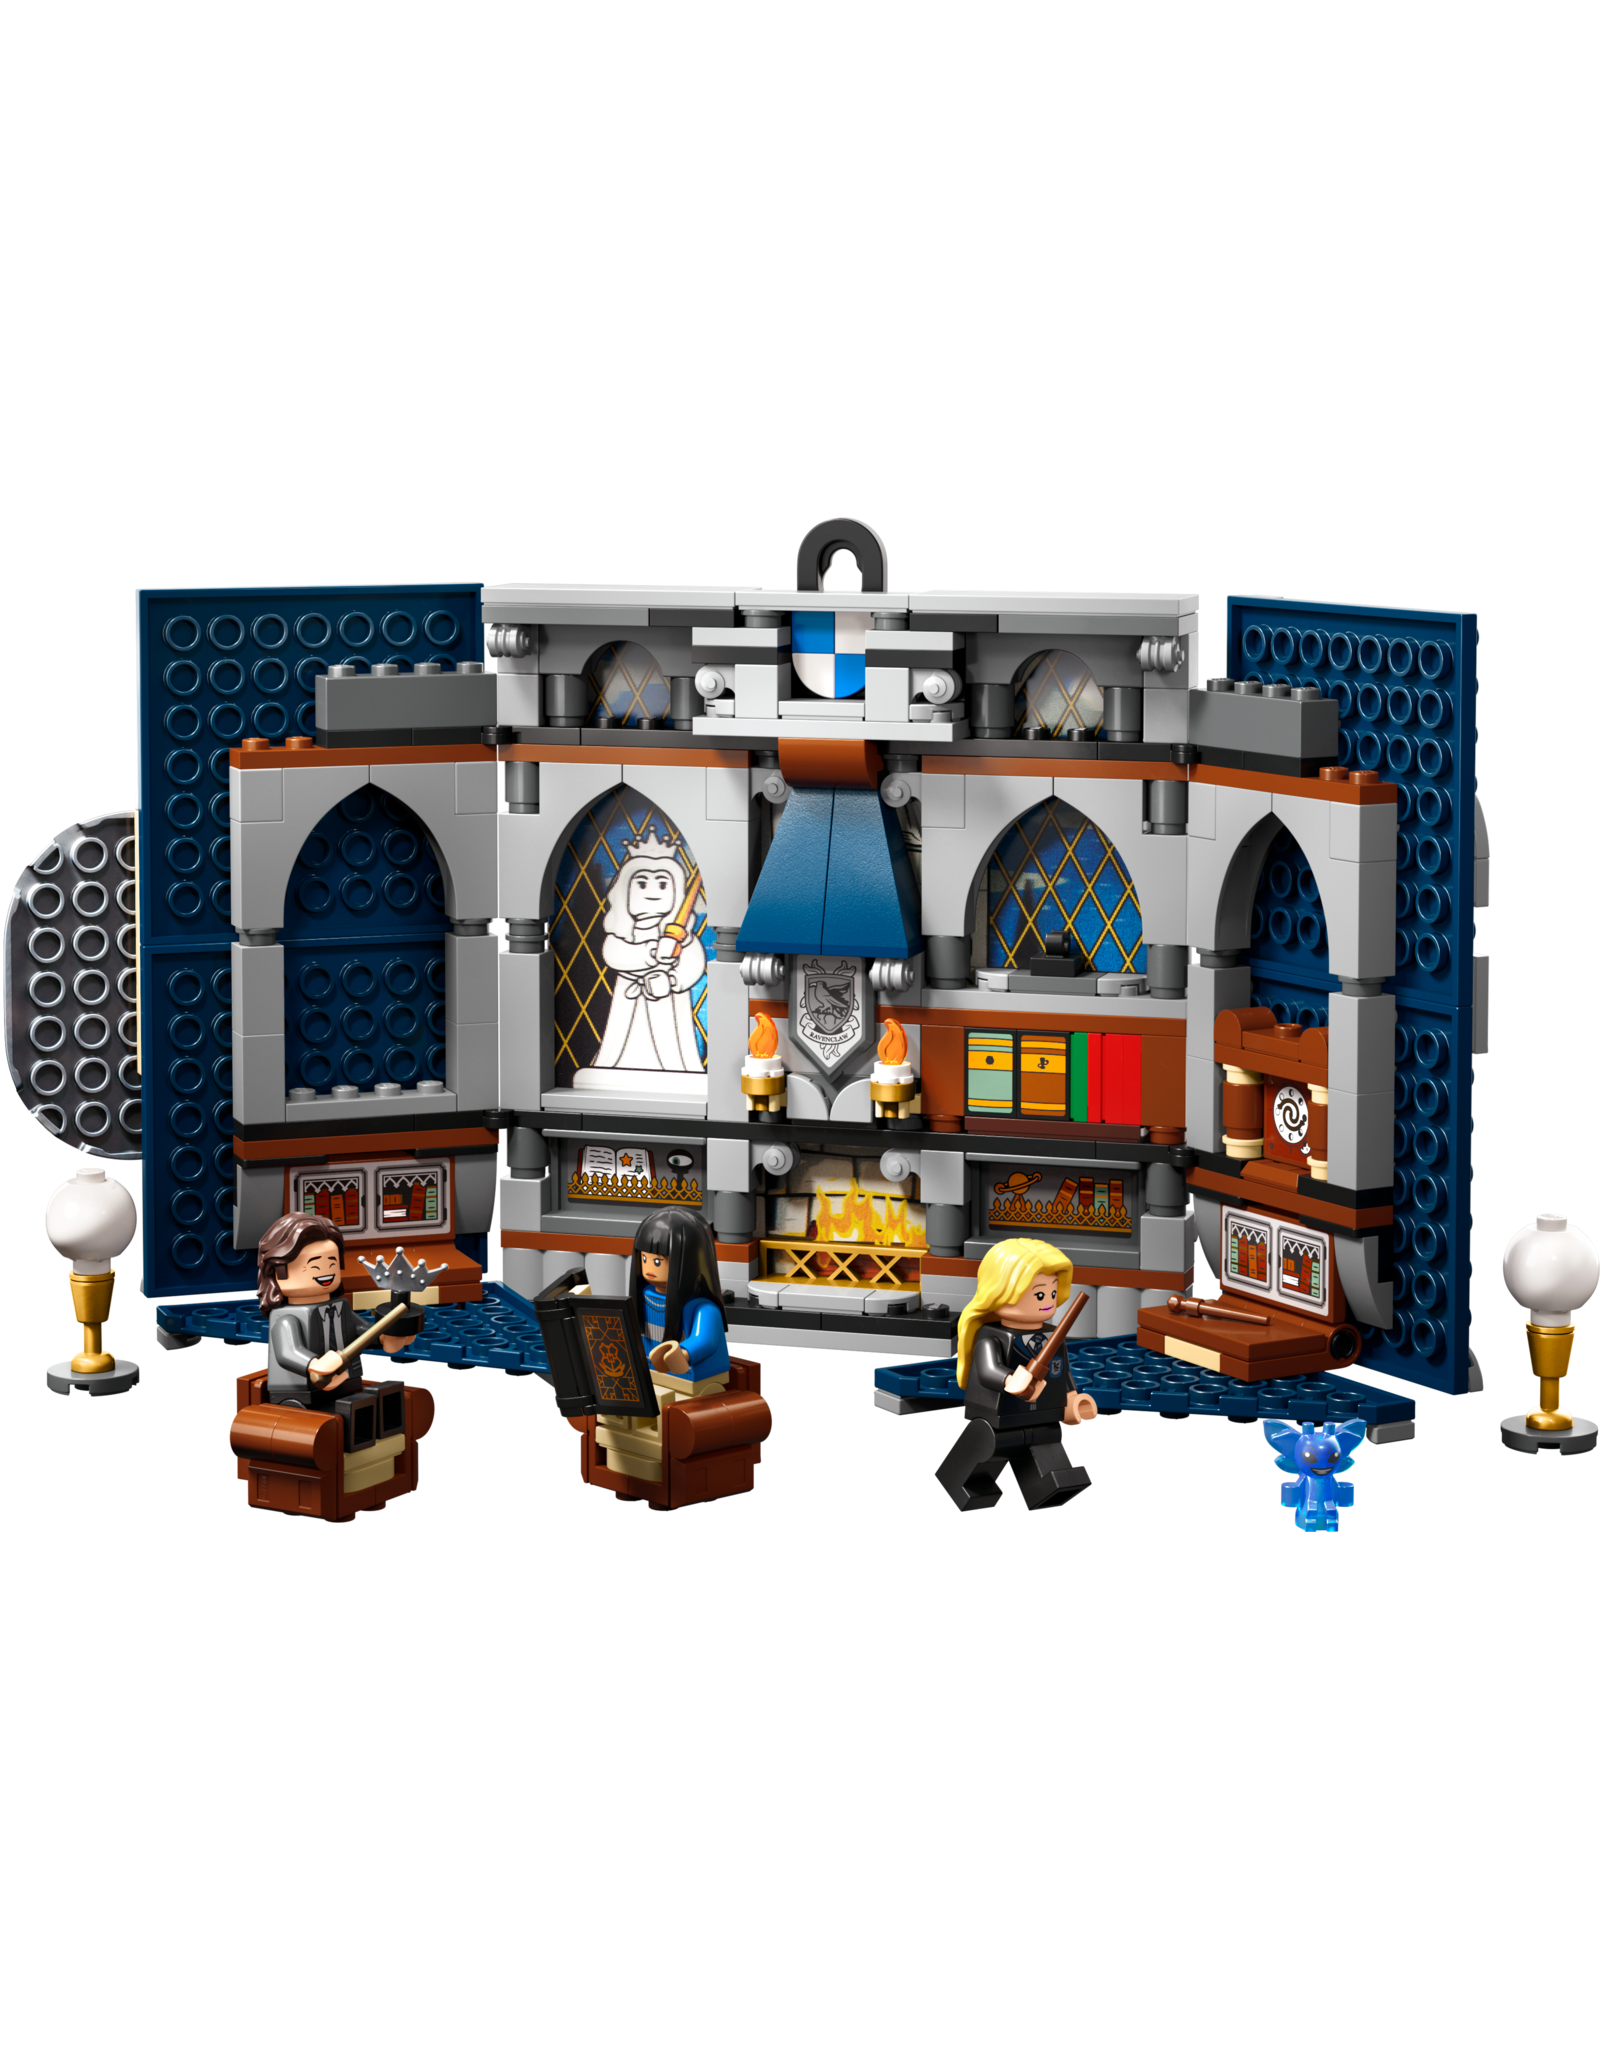 LEGO Harry Potter 76411 Ravenclaw House Banner